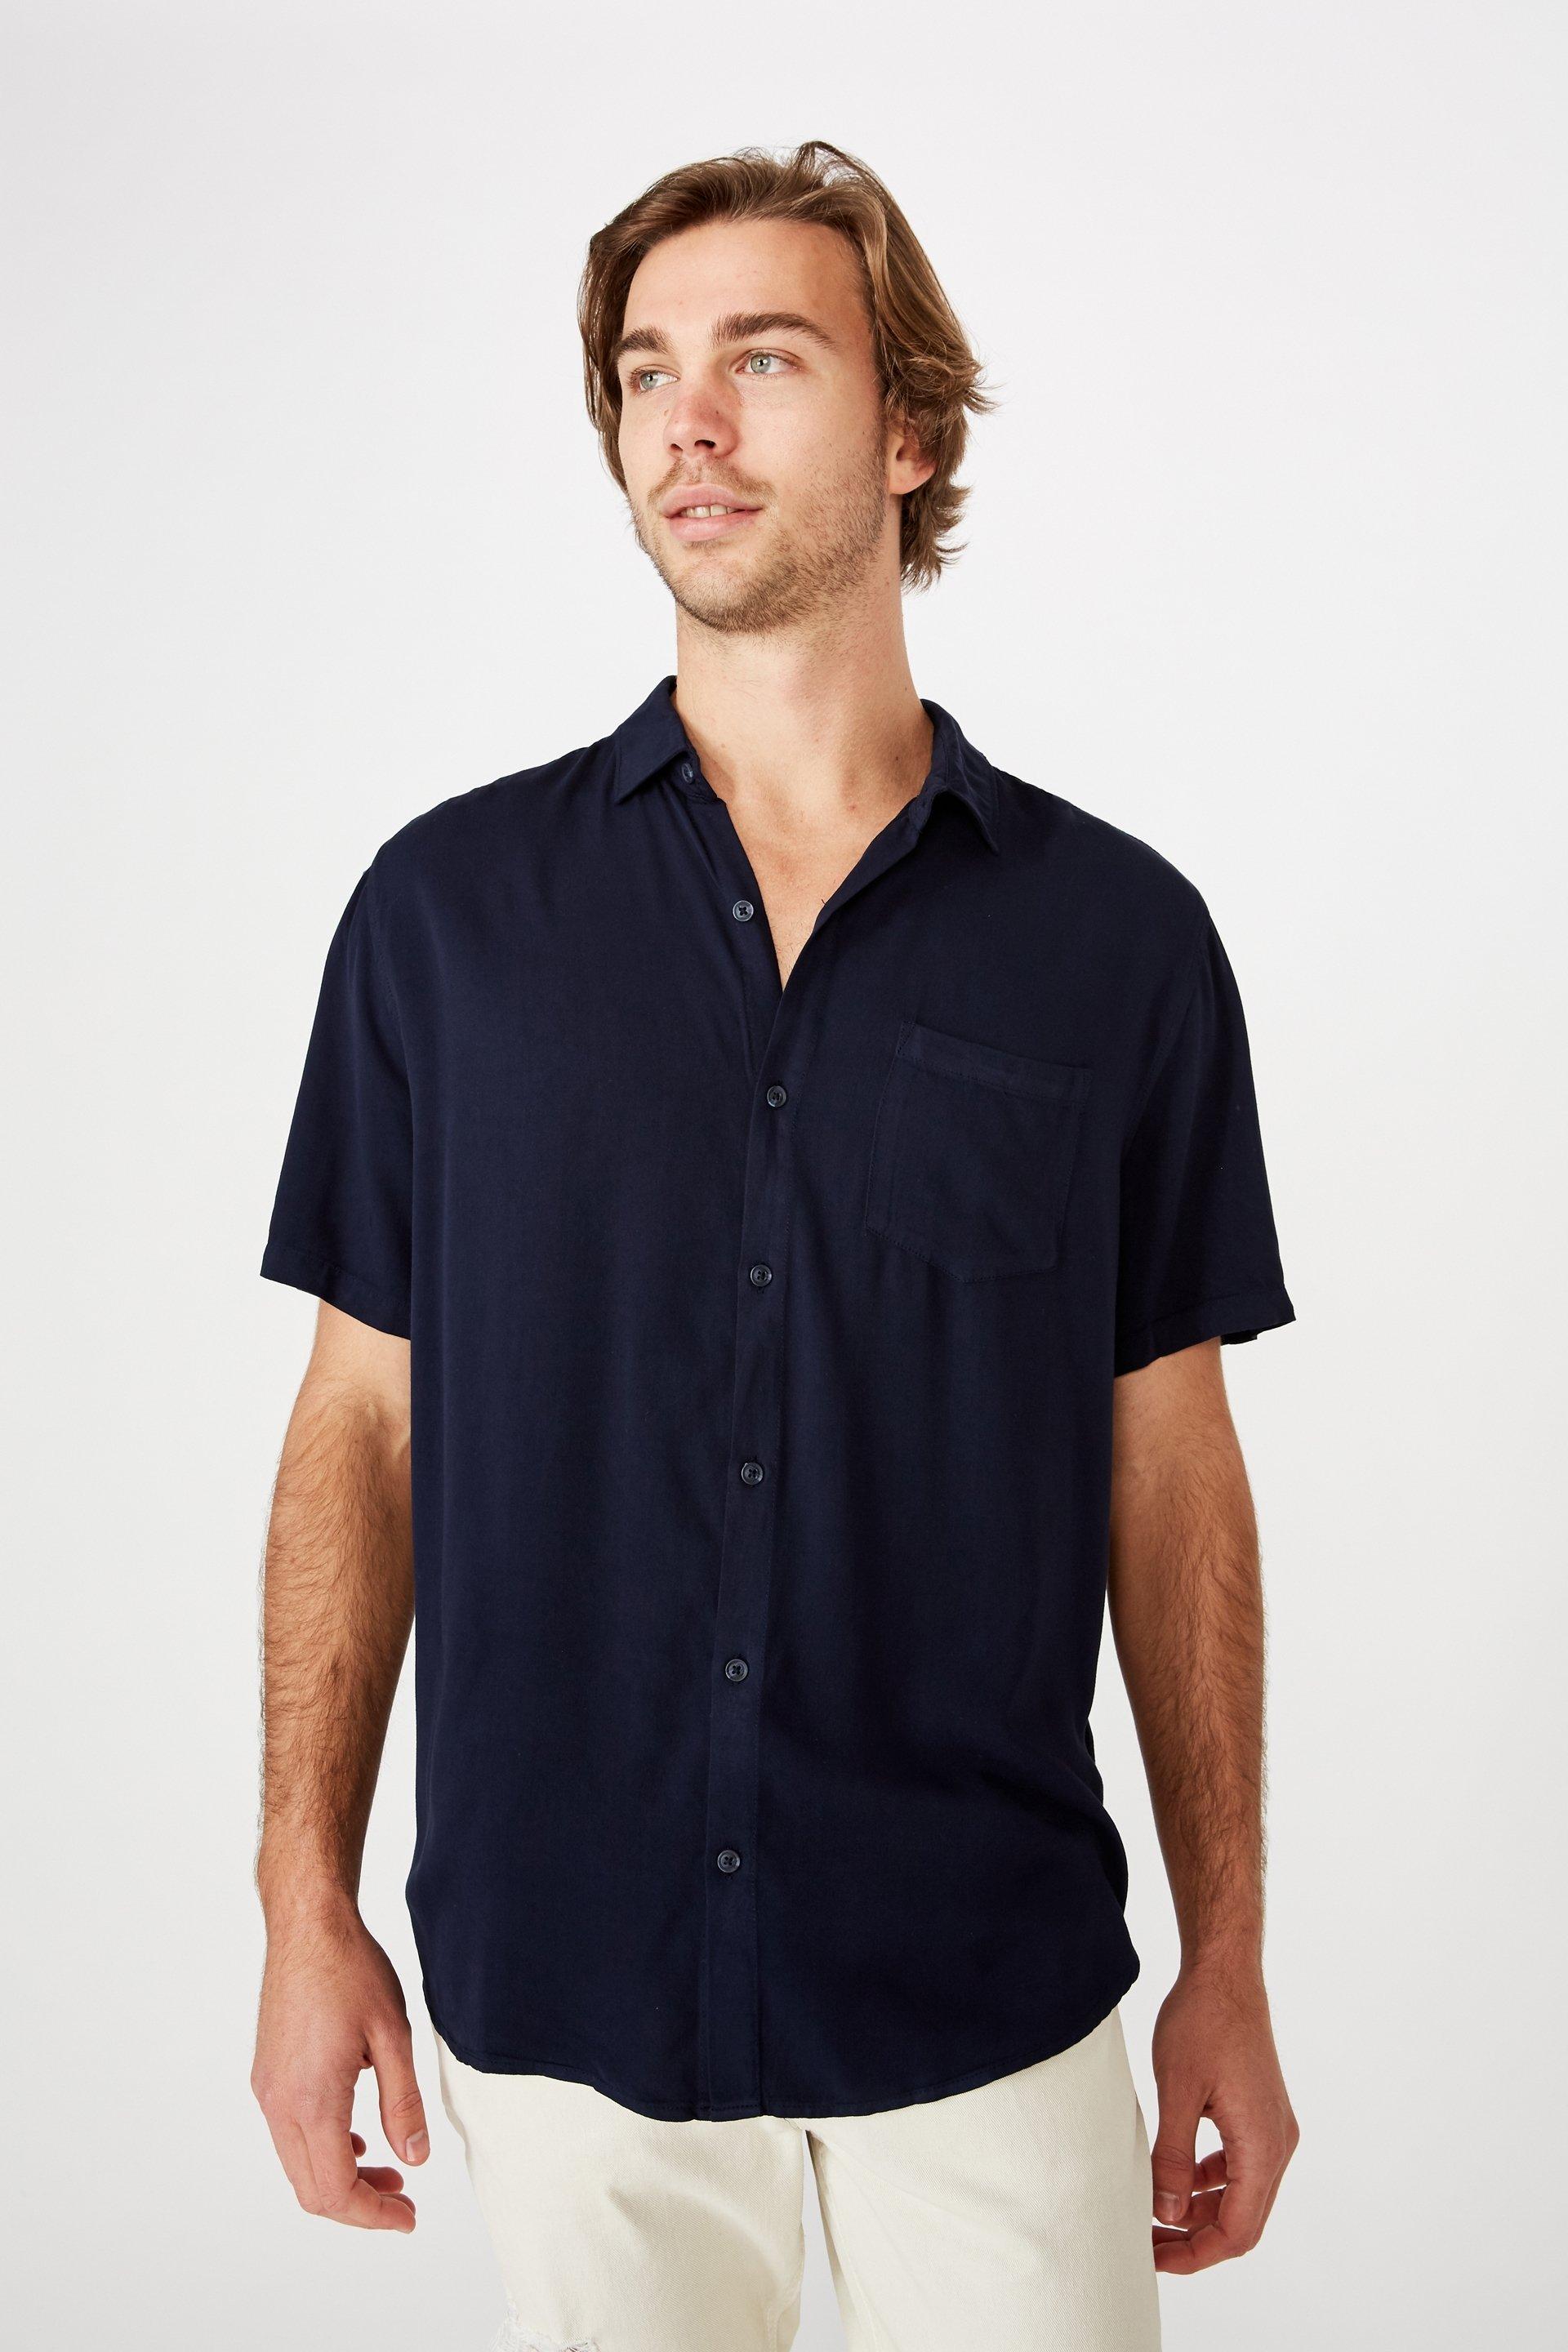 91 short sleeve shirt - navy blue Cotton On Shirts | Superbalist.com